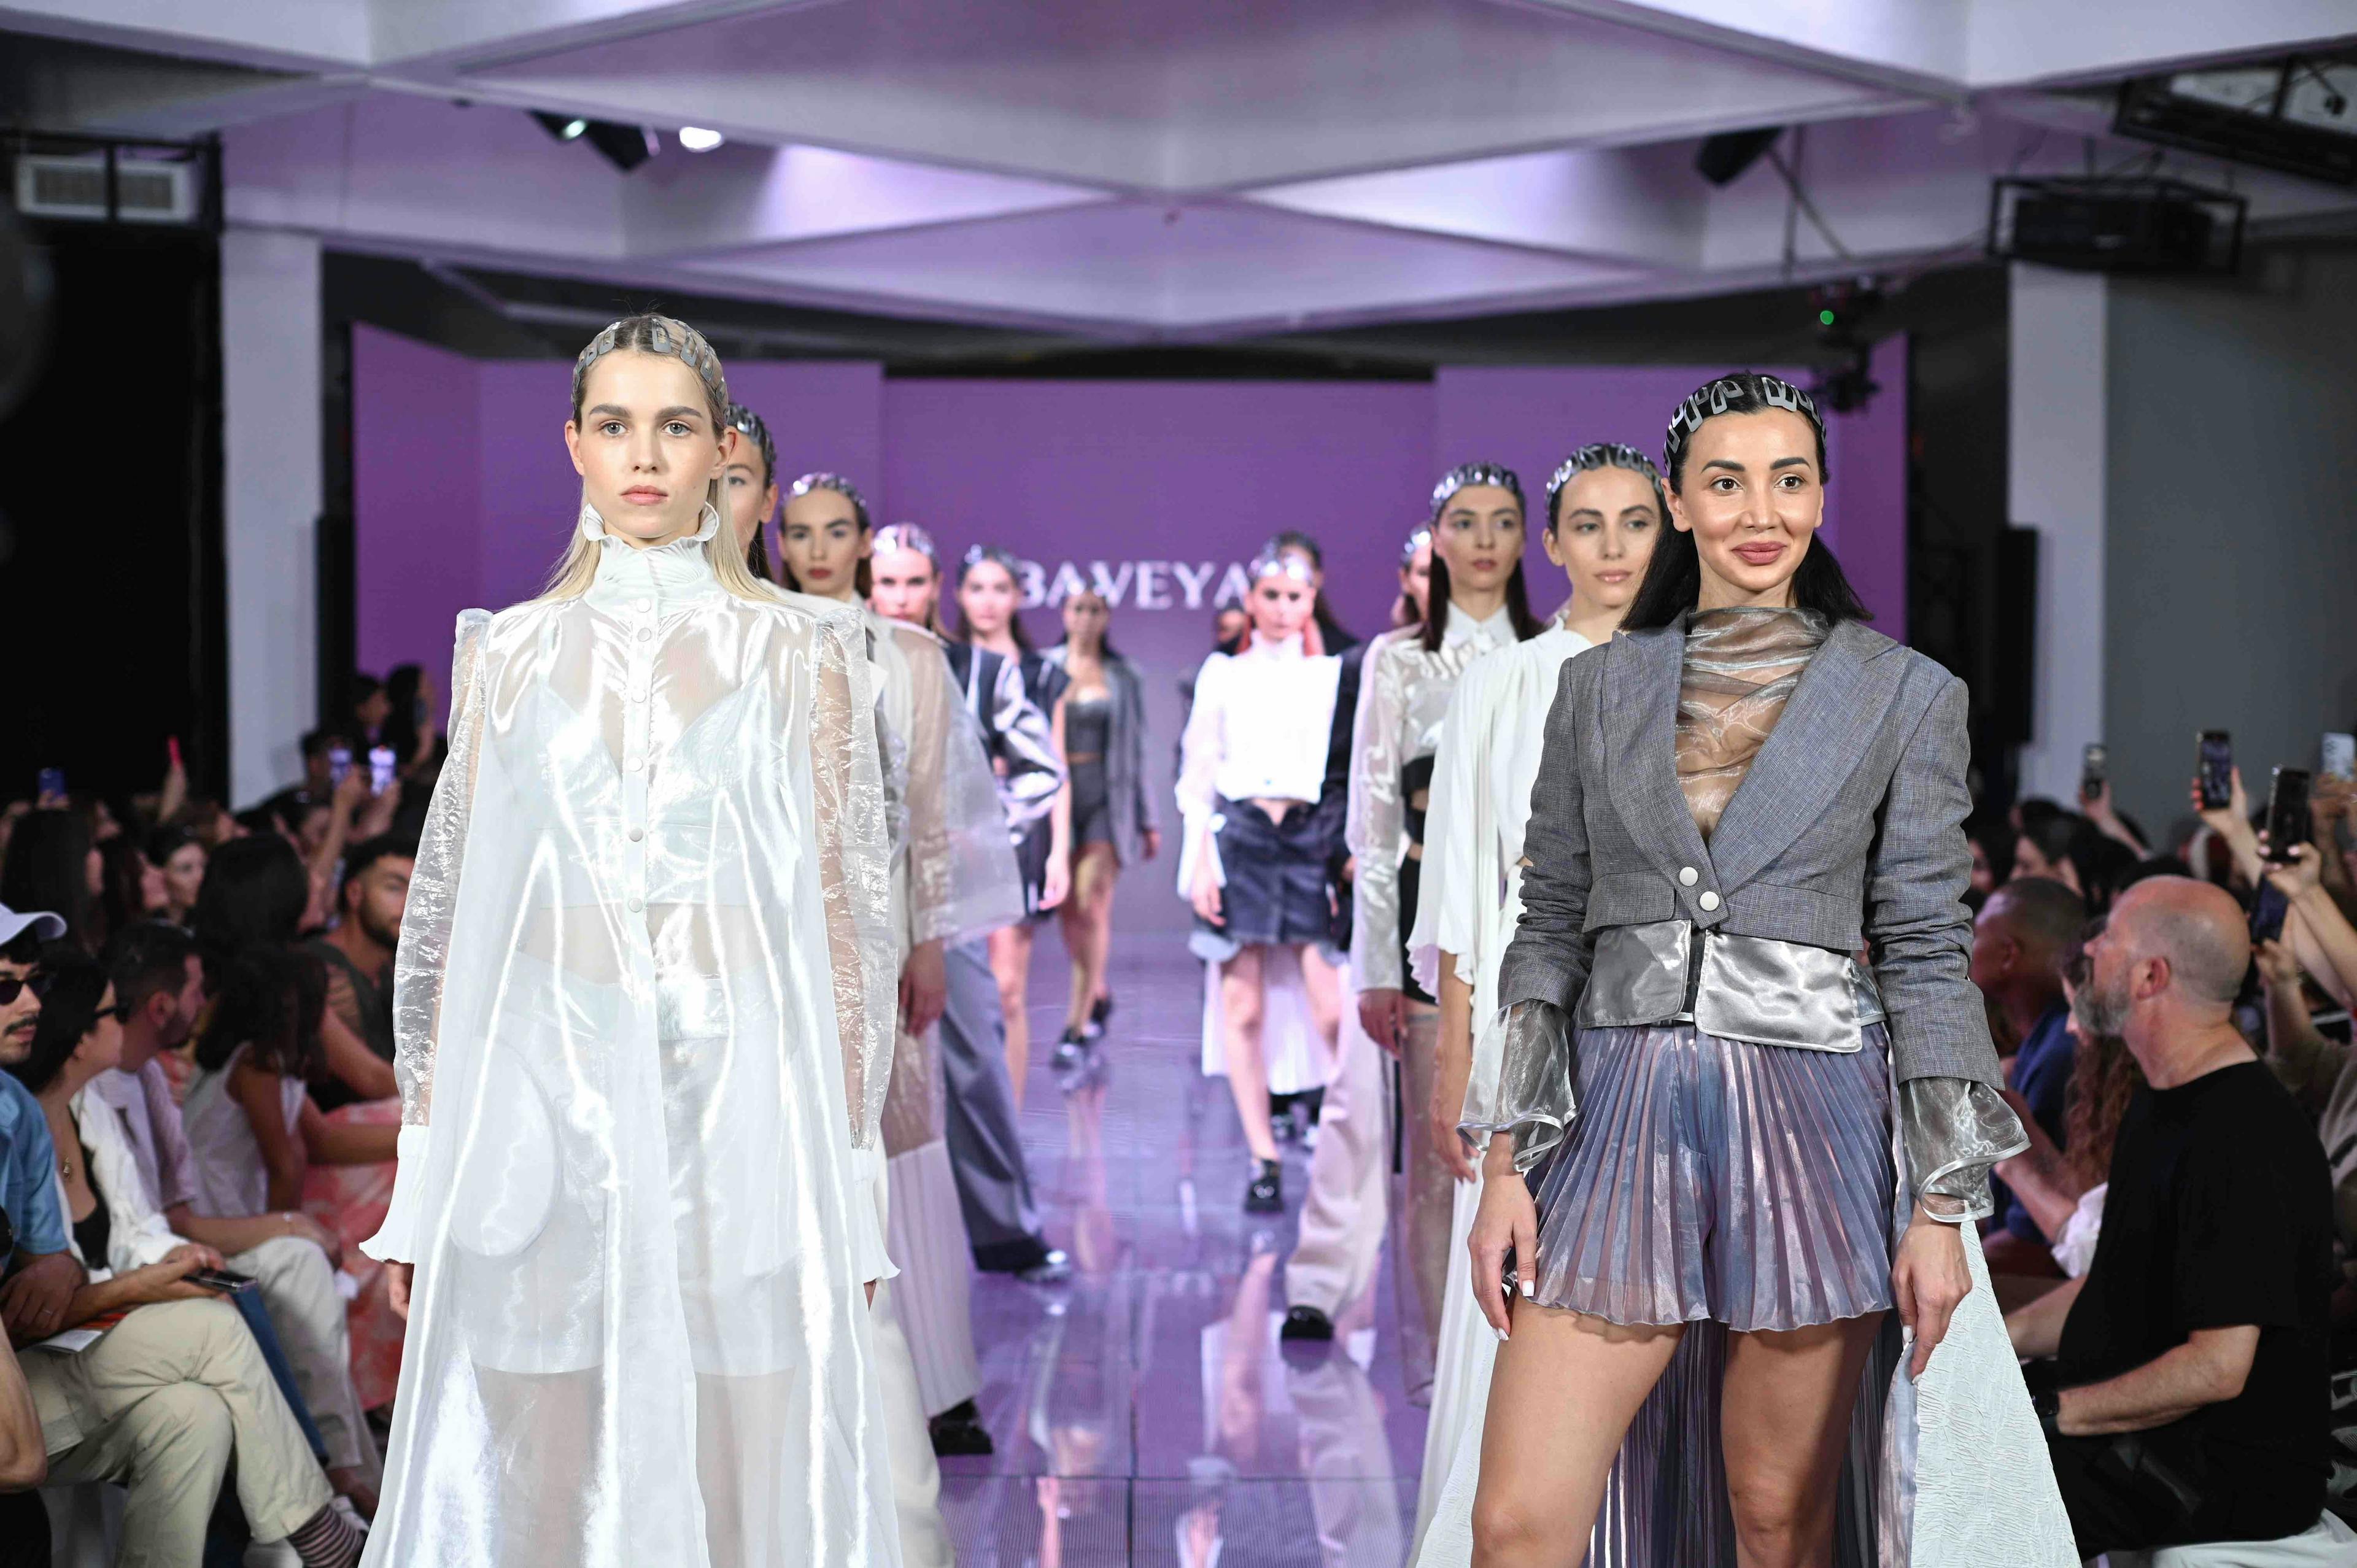 Baveyan - Yerevan Fashion Week (Courtesy of Fashion and Design Chamber of Yerevan Fashion Week)